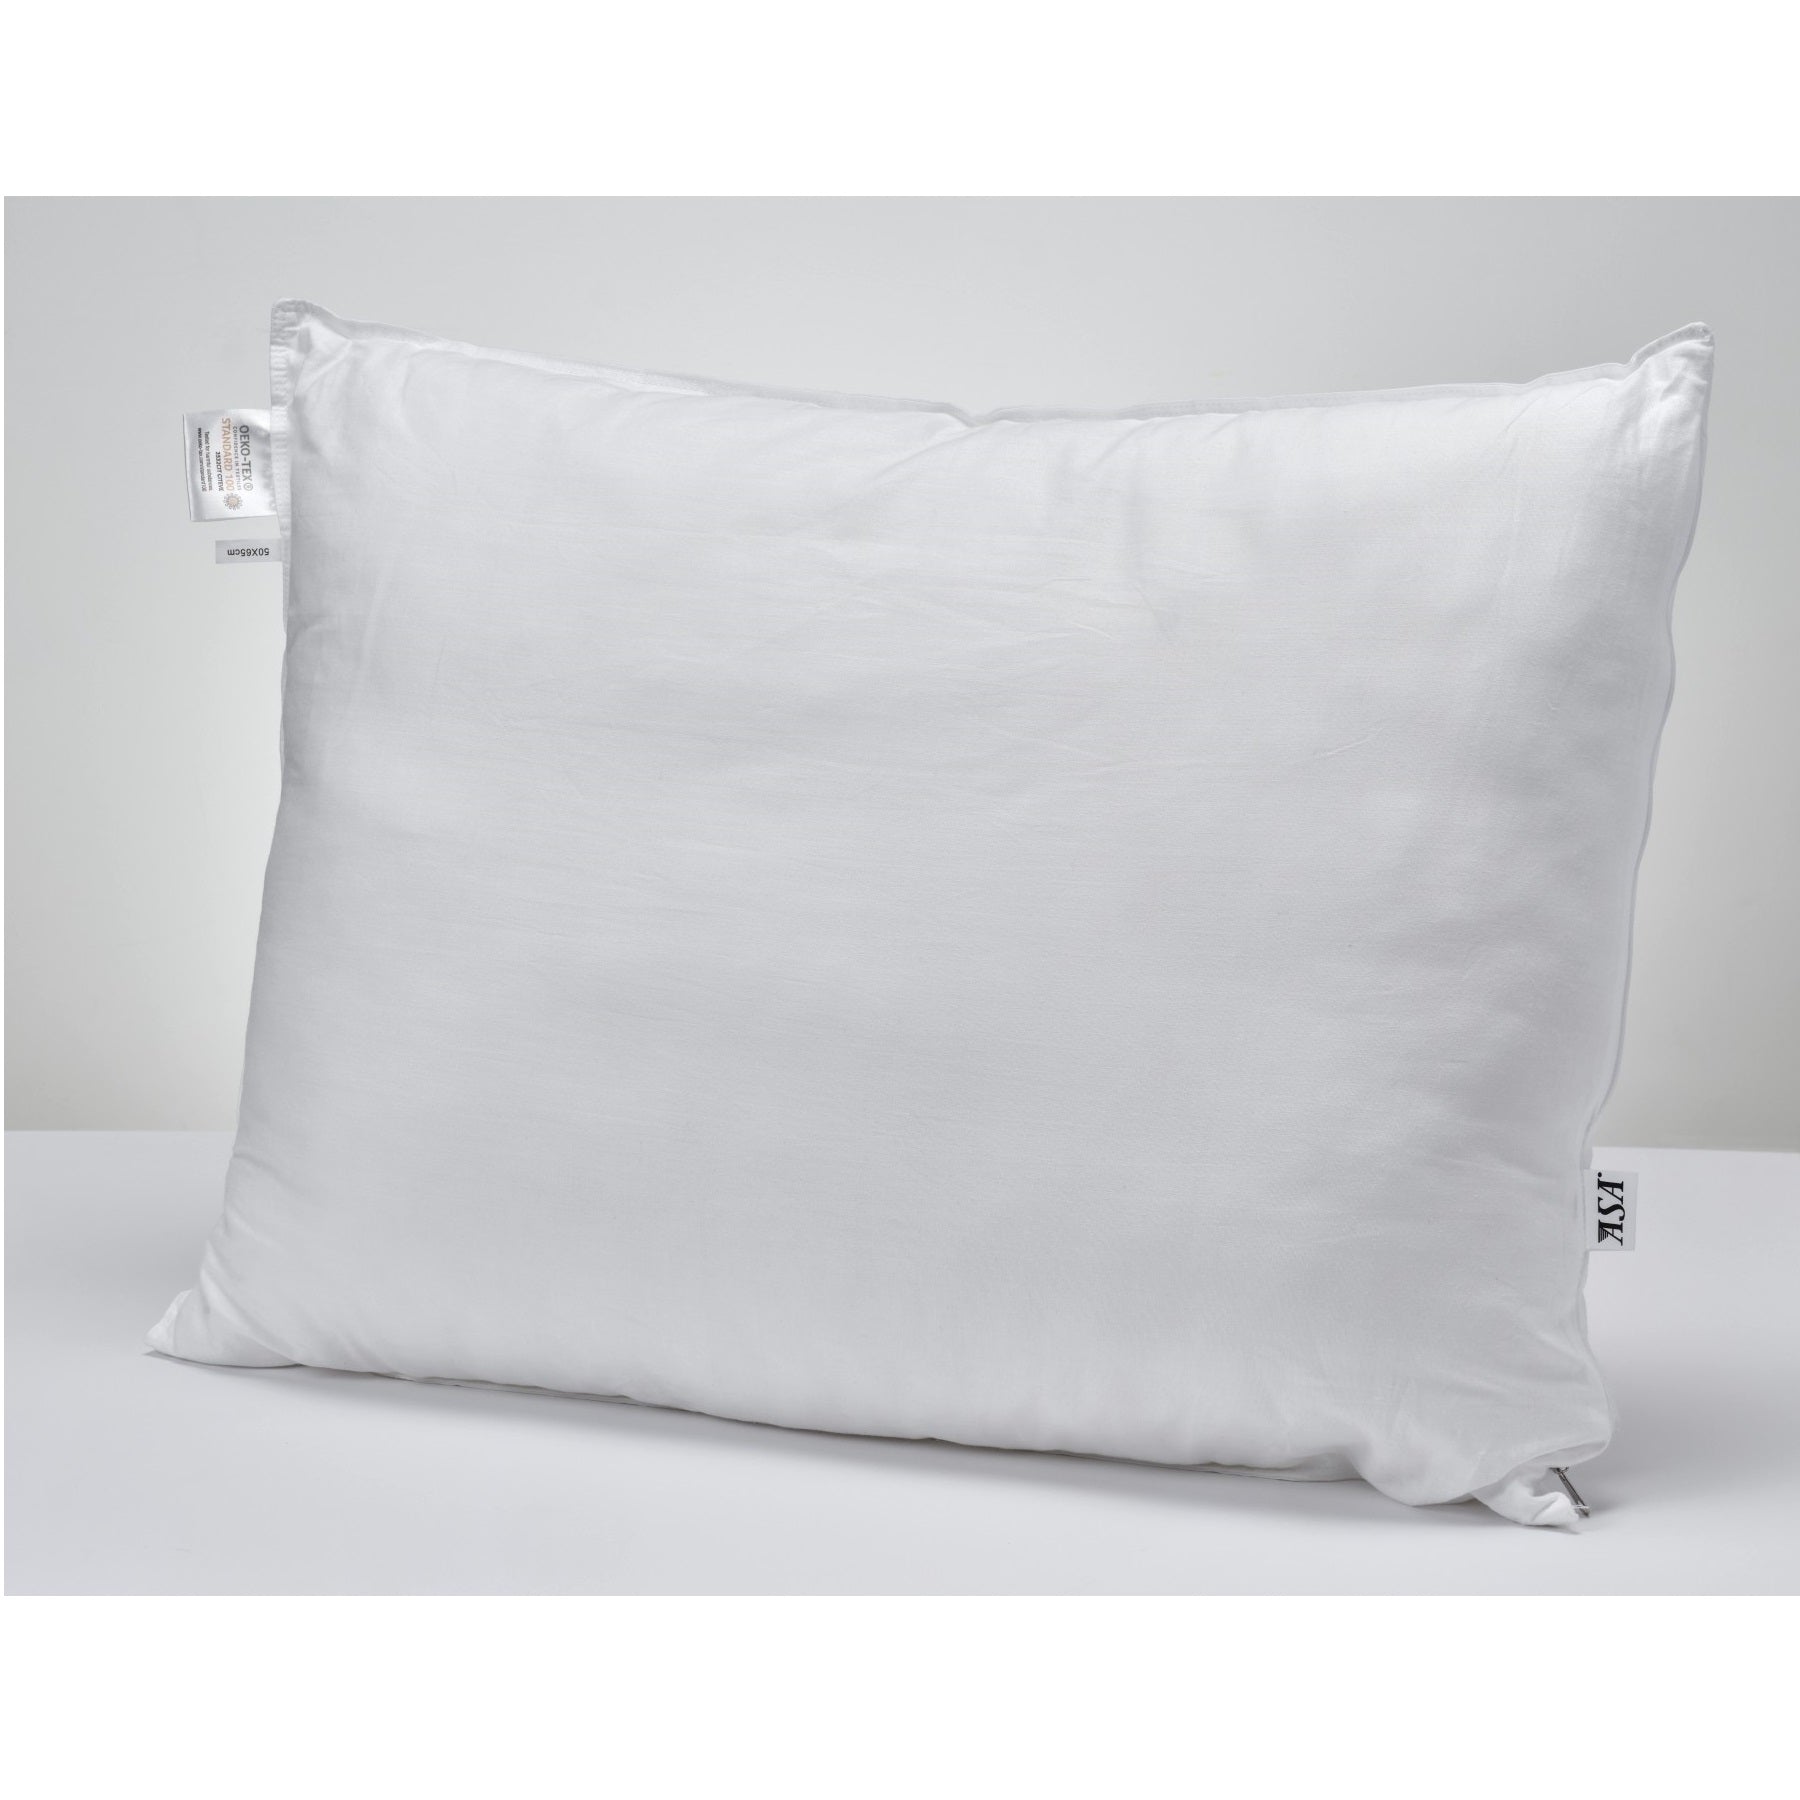 Home adjustable Pillow